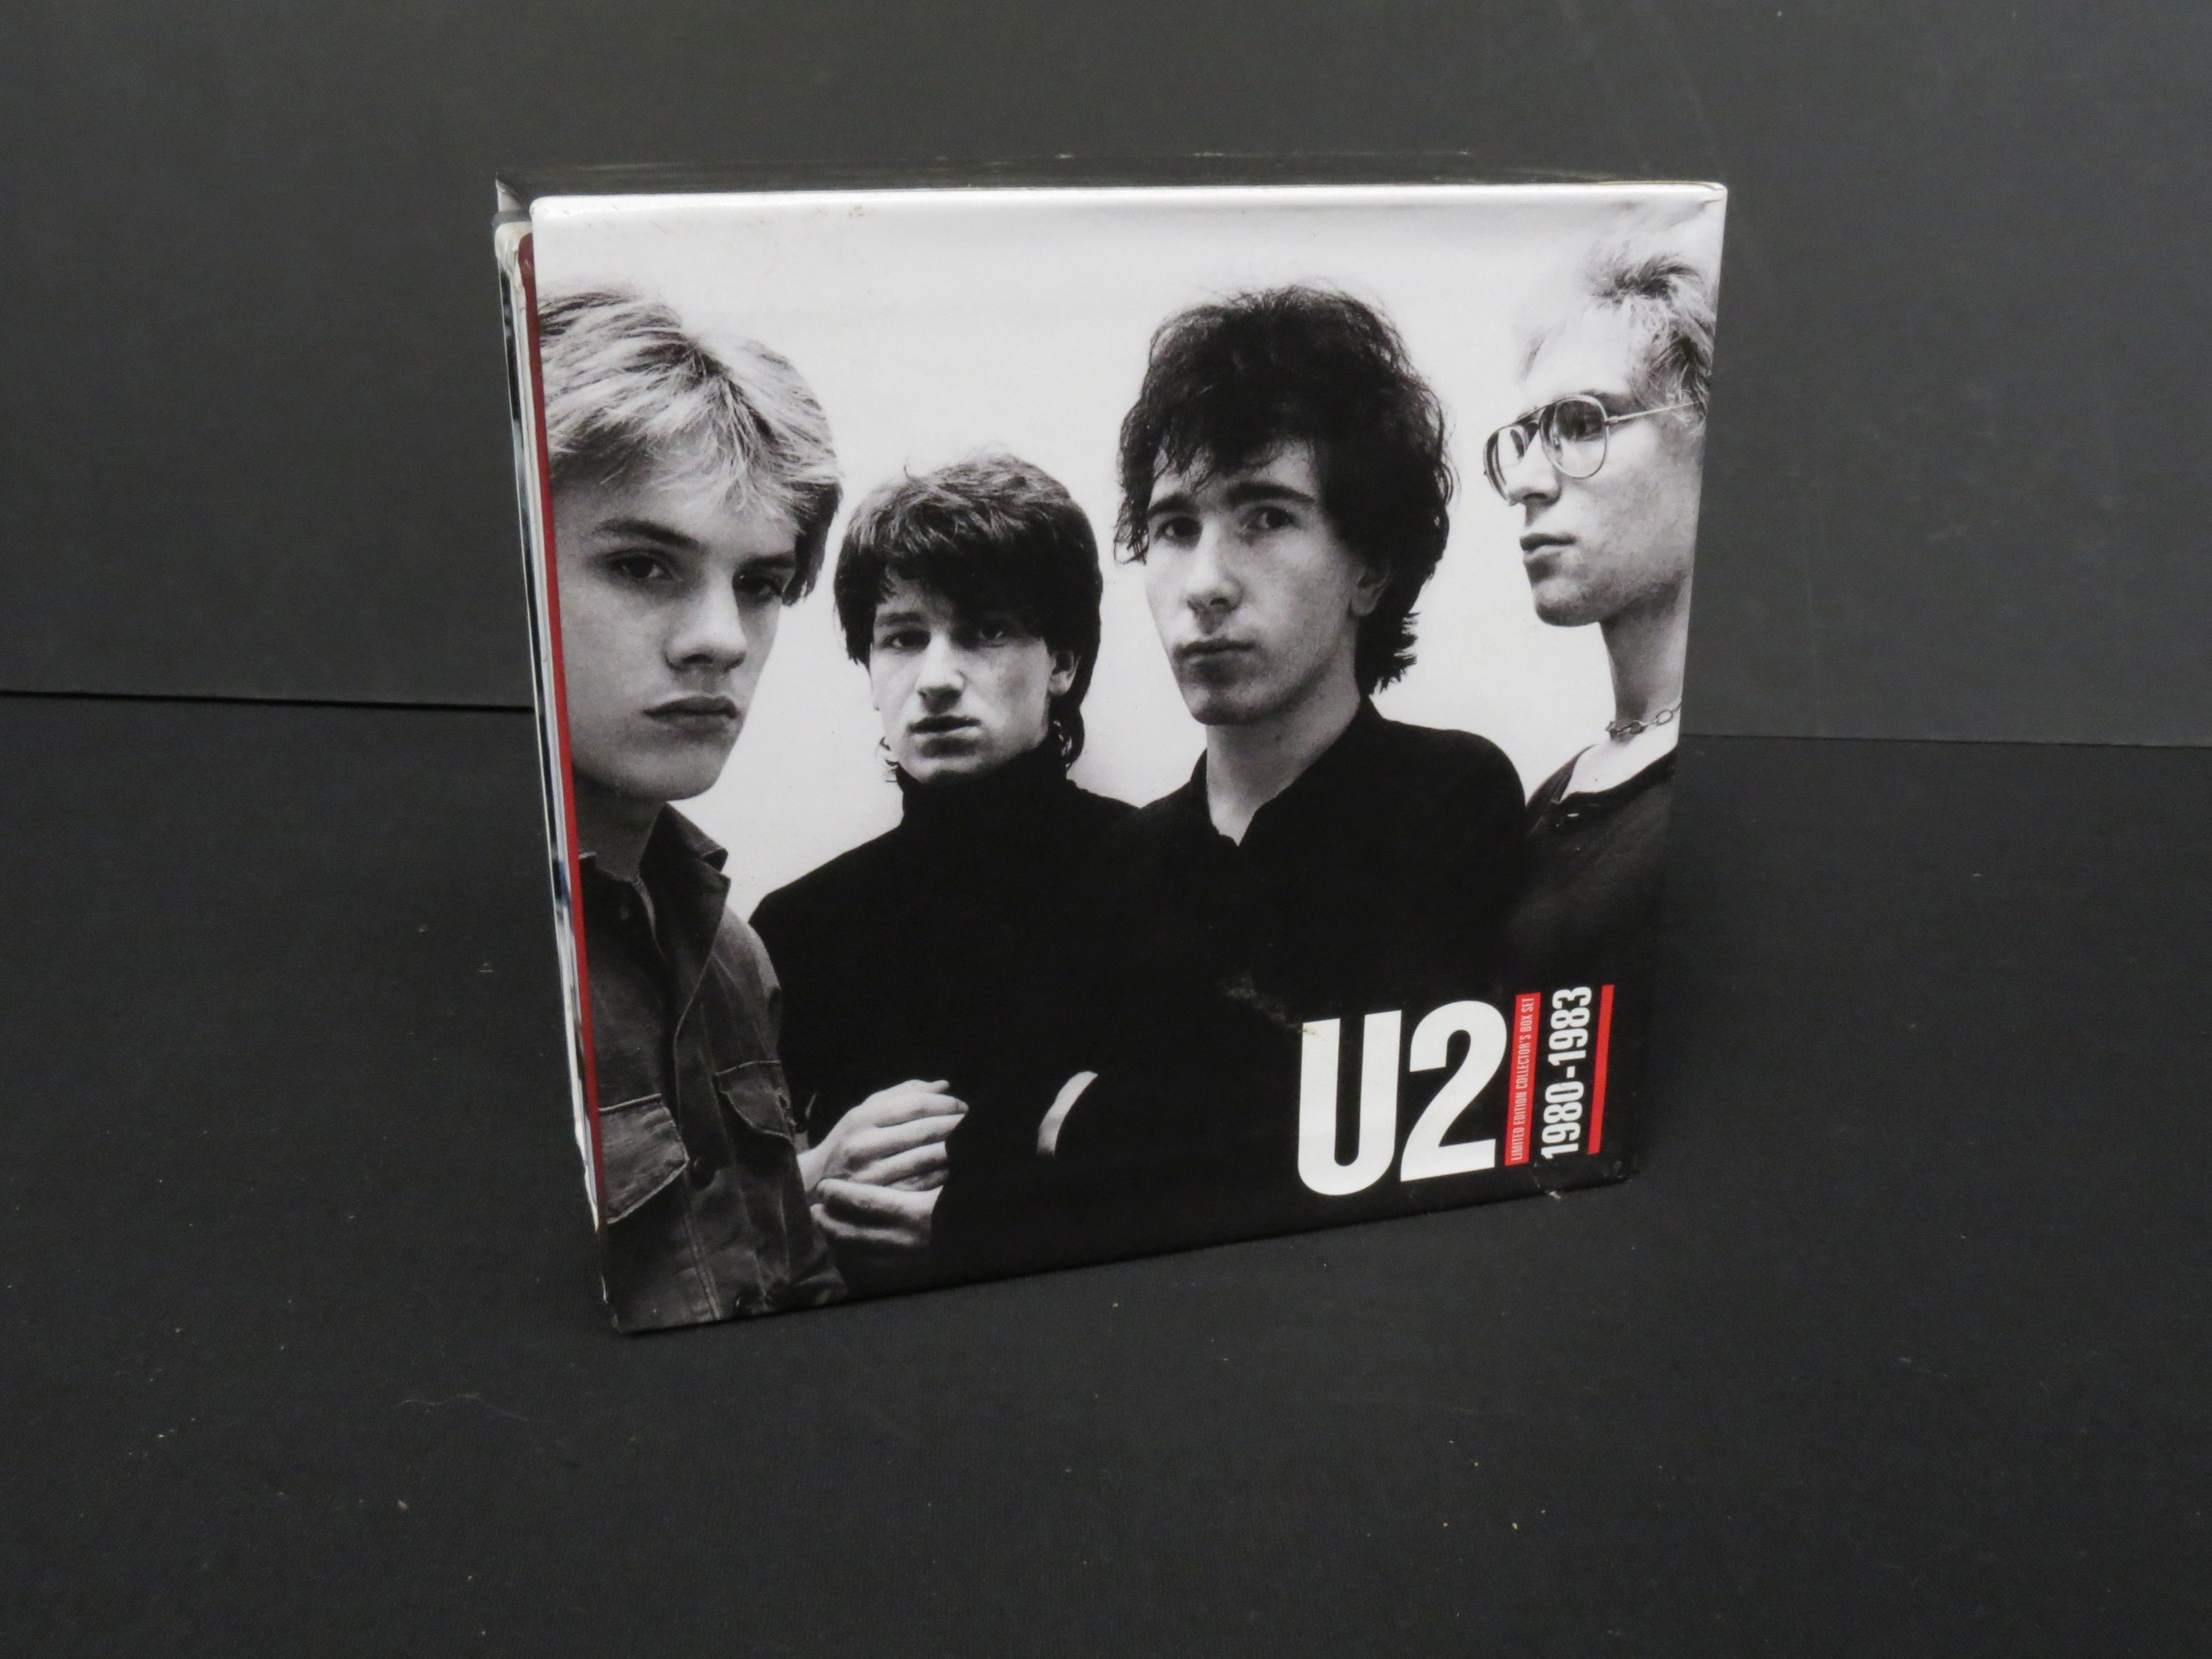 CDs - U2 ltd edn Collectors Box Set 1980-1983, complete with button badges